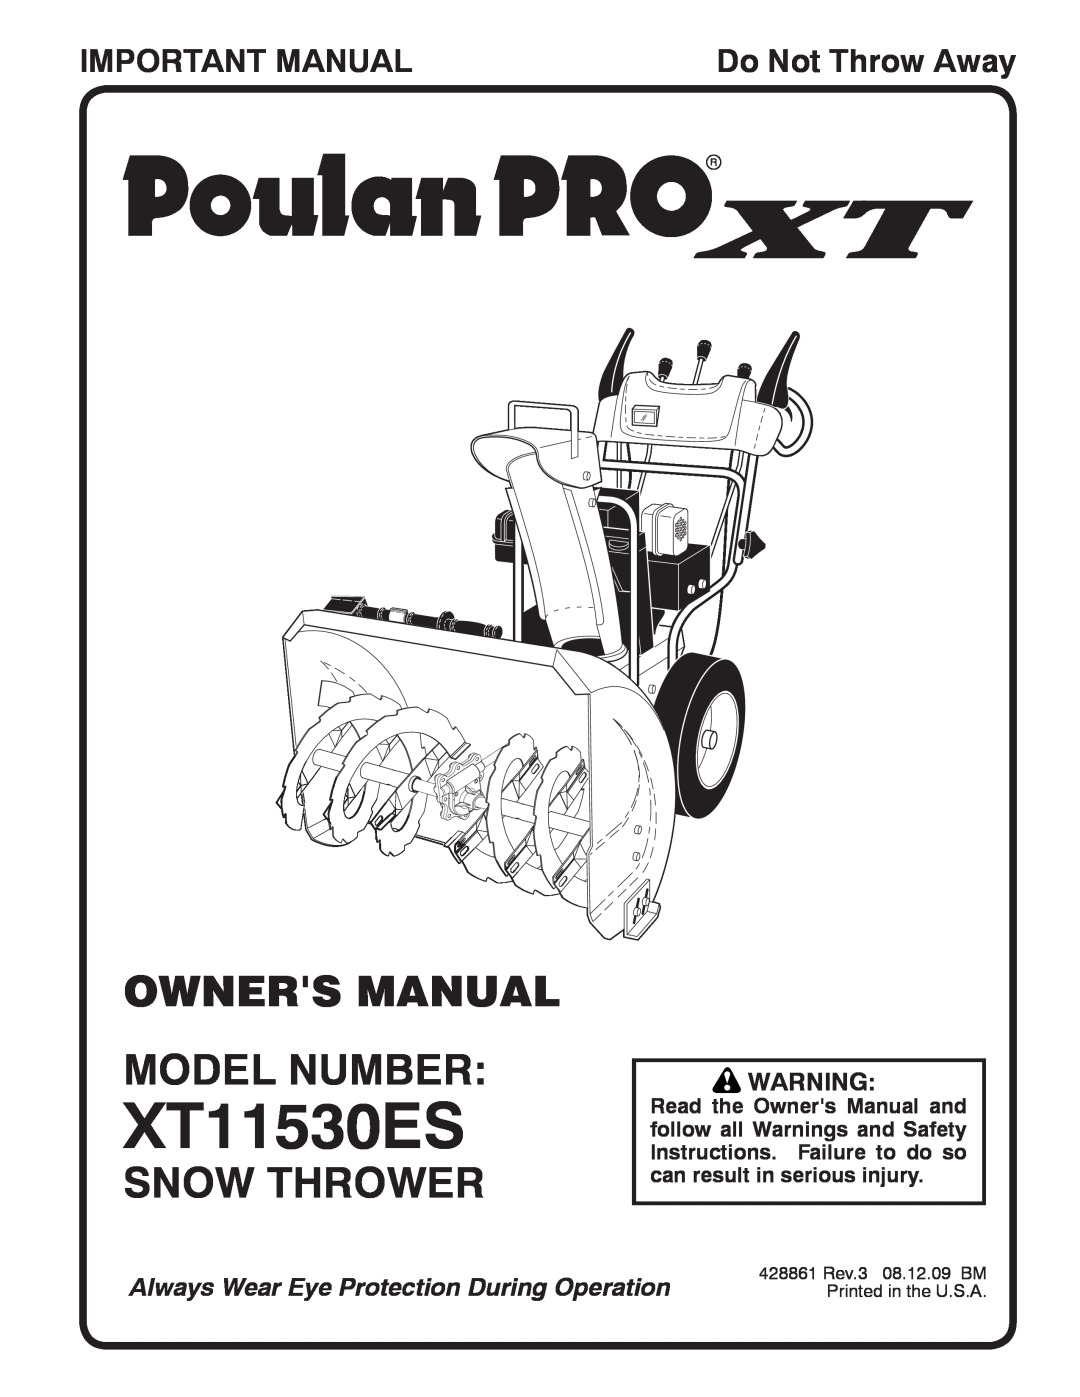 Poulan 96192003500, 428861 owner manual Snow Thrower, Important Manual, XT11530ES, Do Not Throw Away 